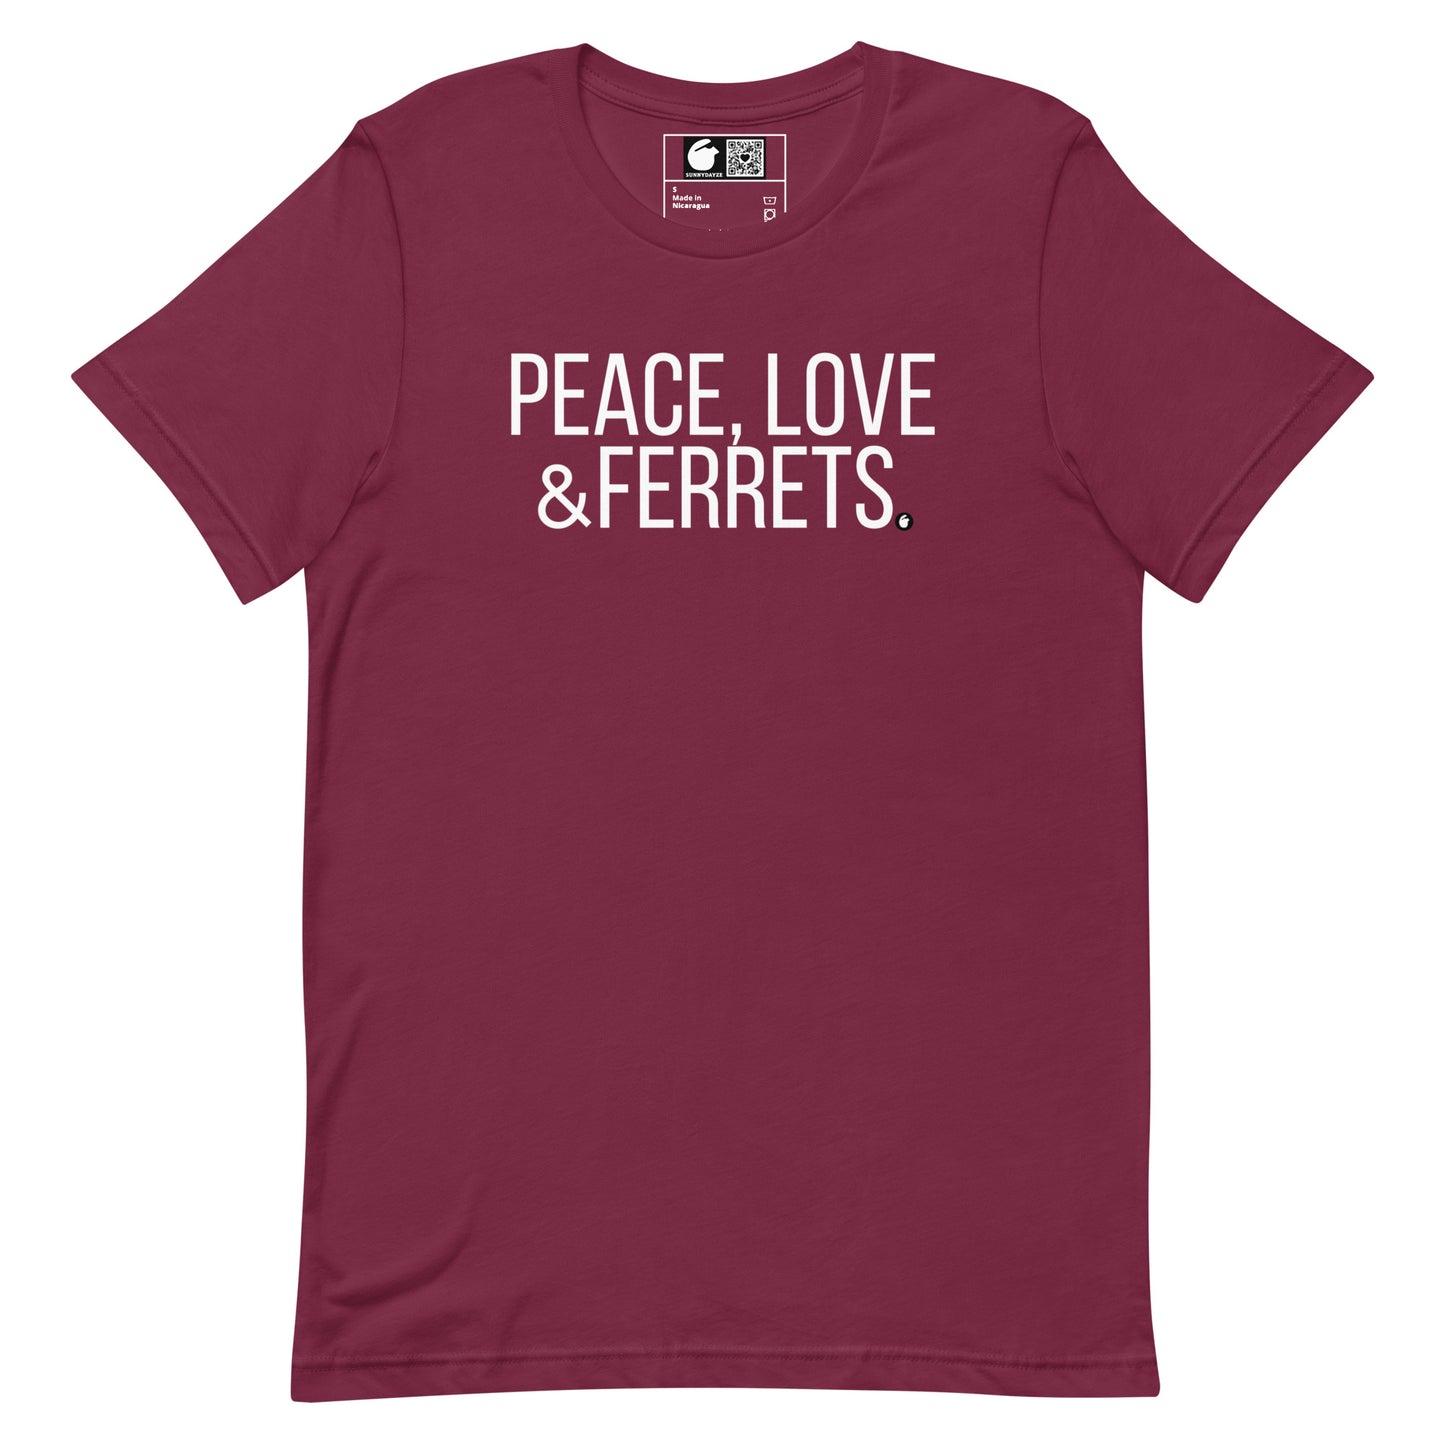 FERRETS Short-Sleeve Unisex t-shirt